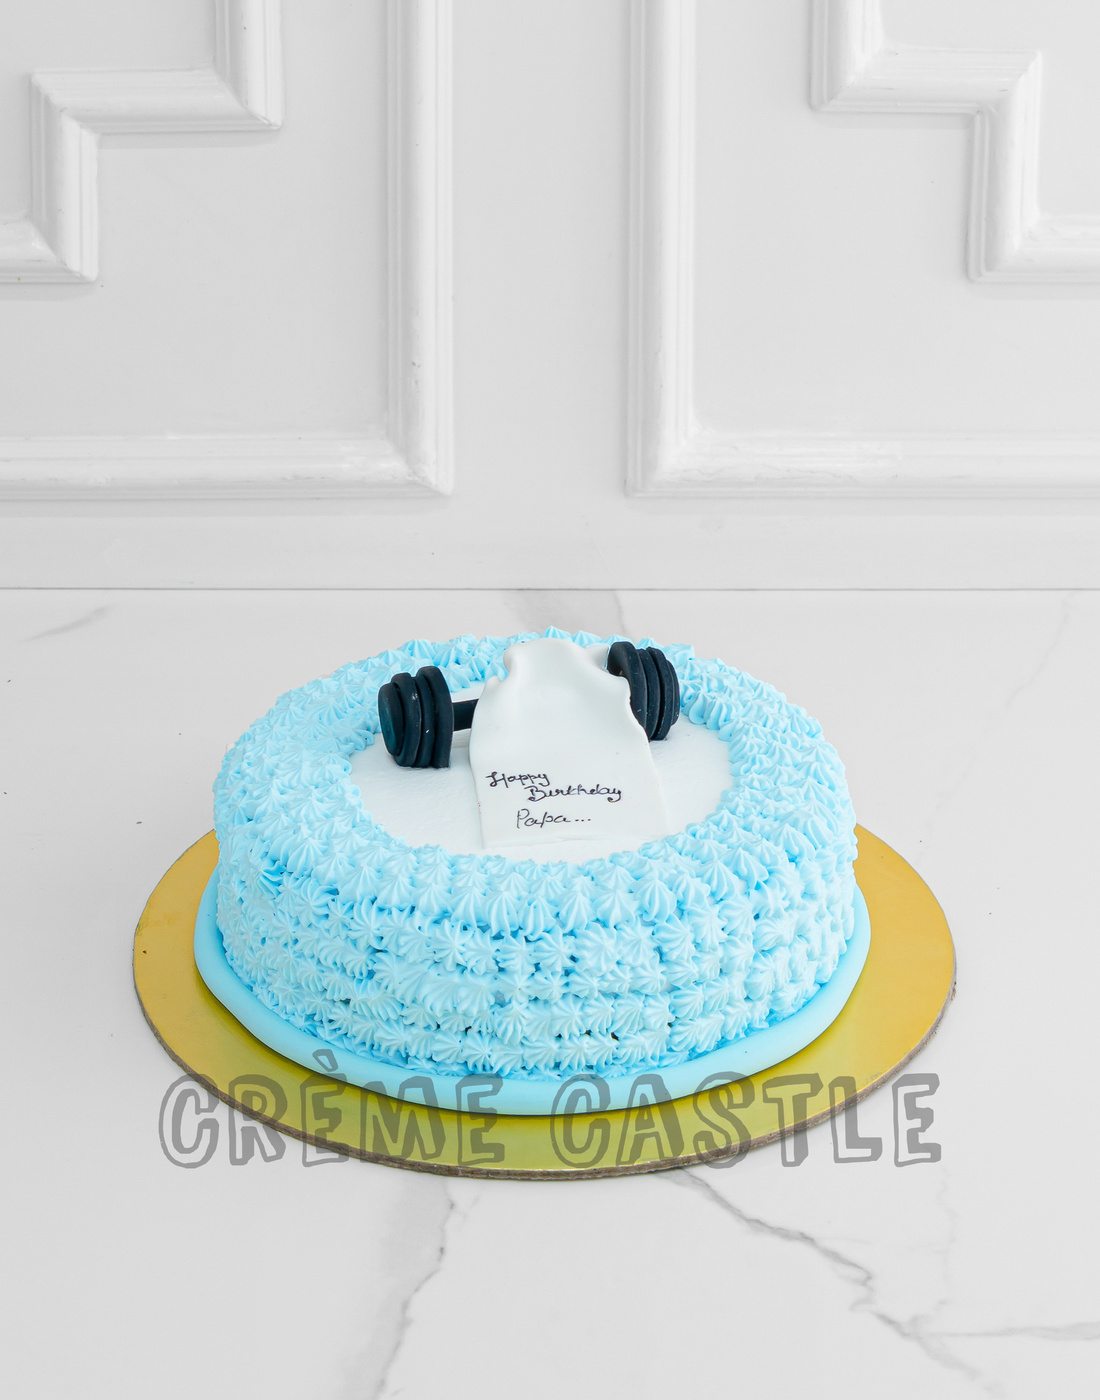 Gym Theme Cake | Designer Cake | Yummy cake